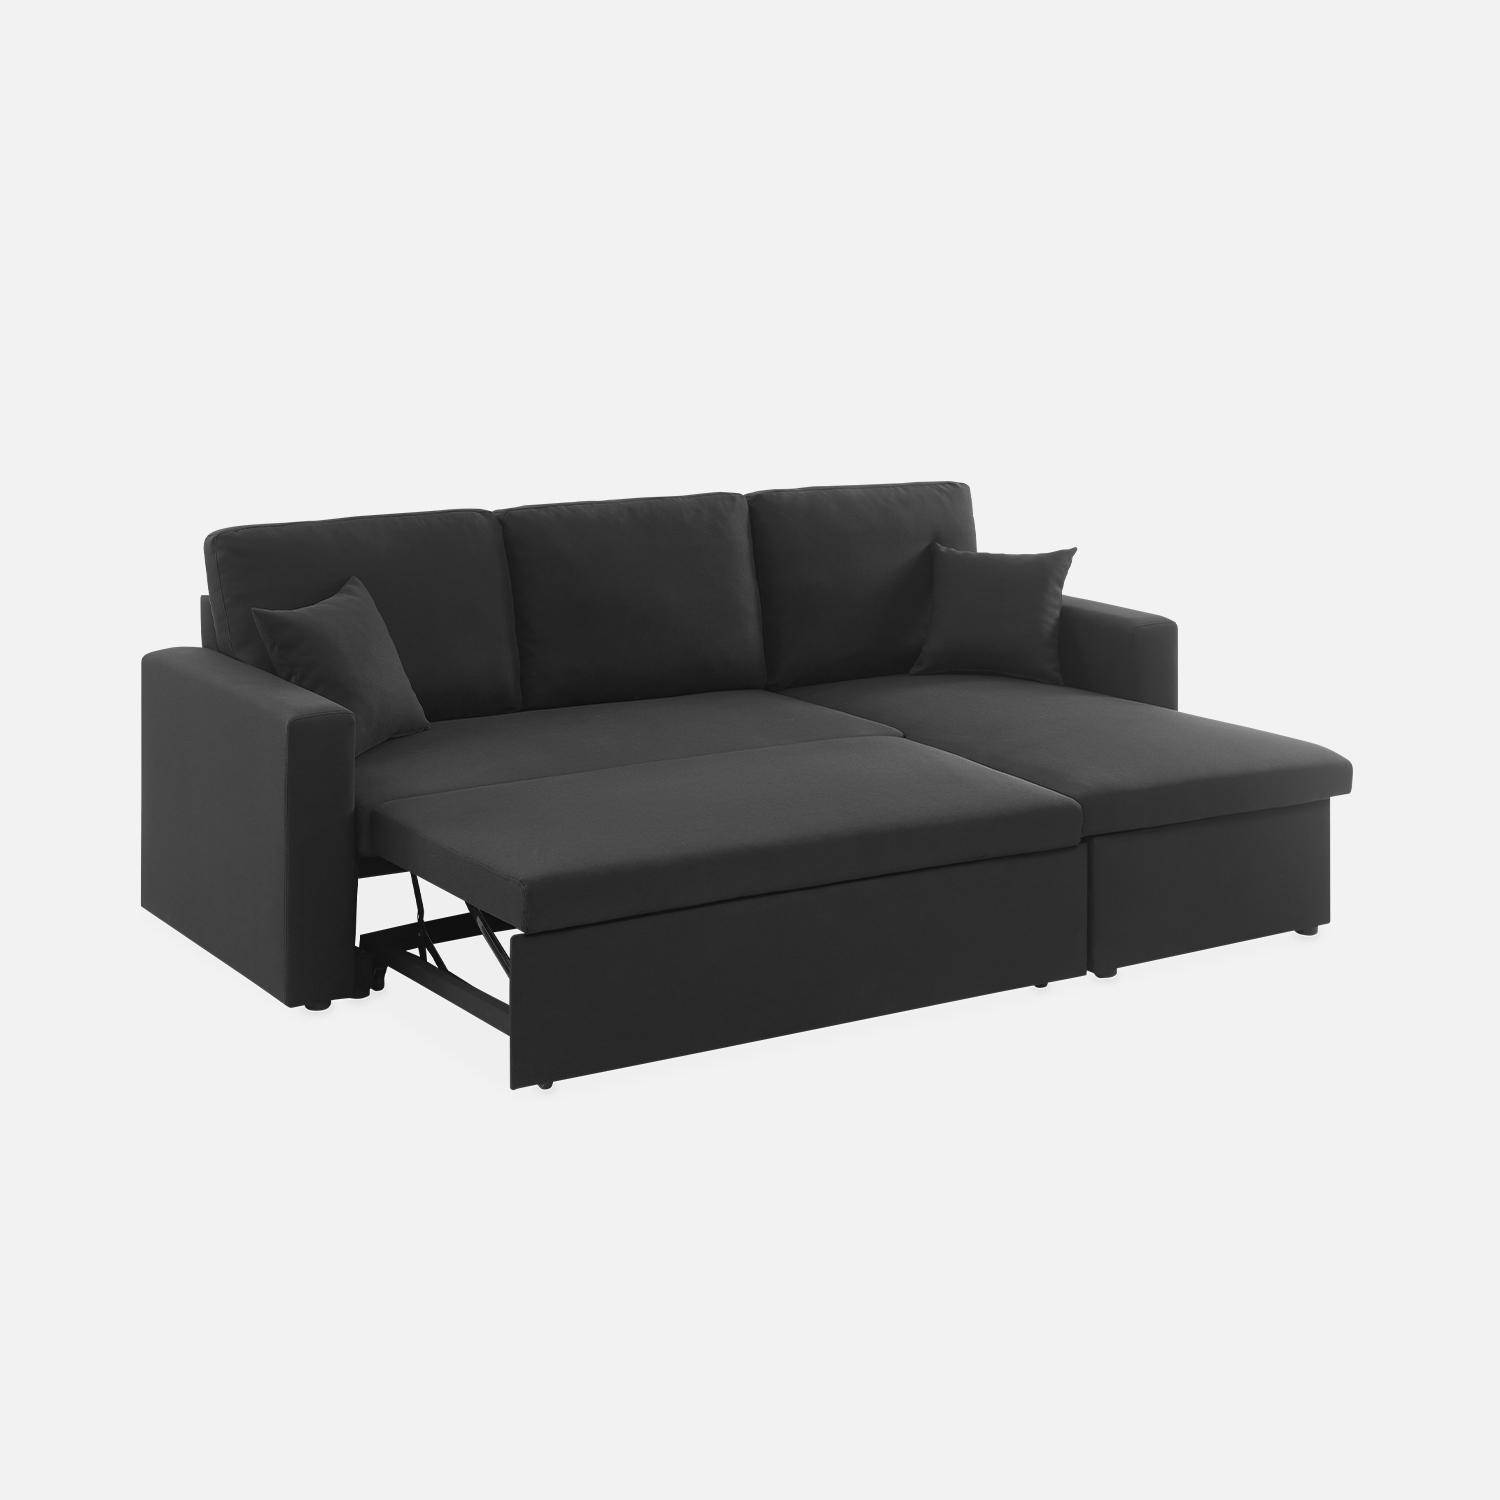 3-seater reversible black corner sofa bed with storage box, black L219xD81xH68cm, IDA Photo9